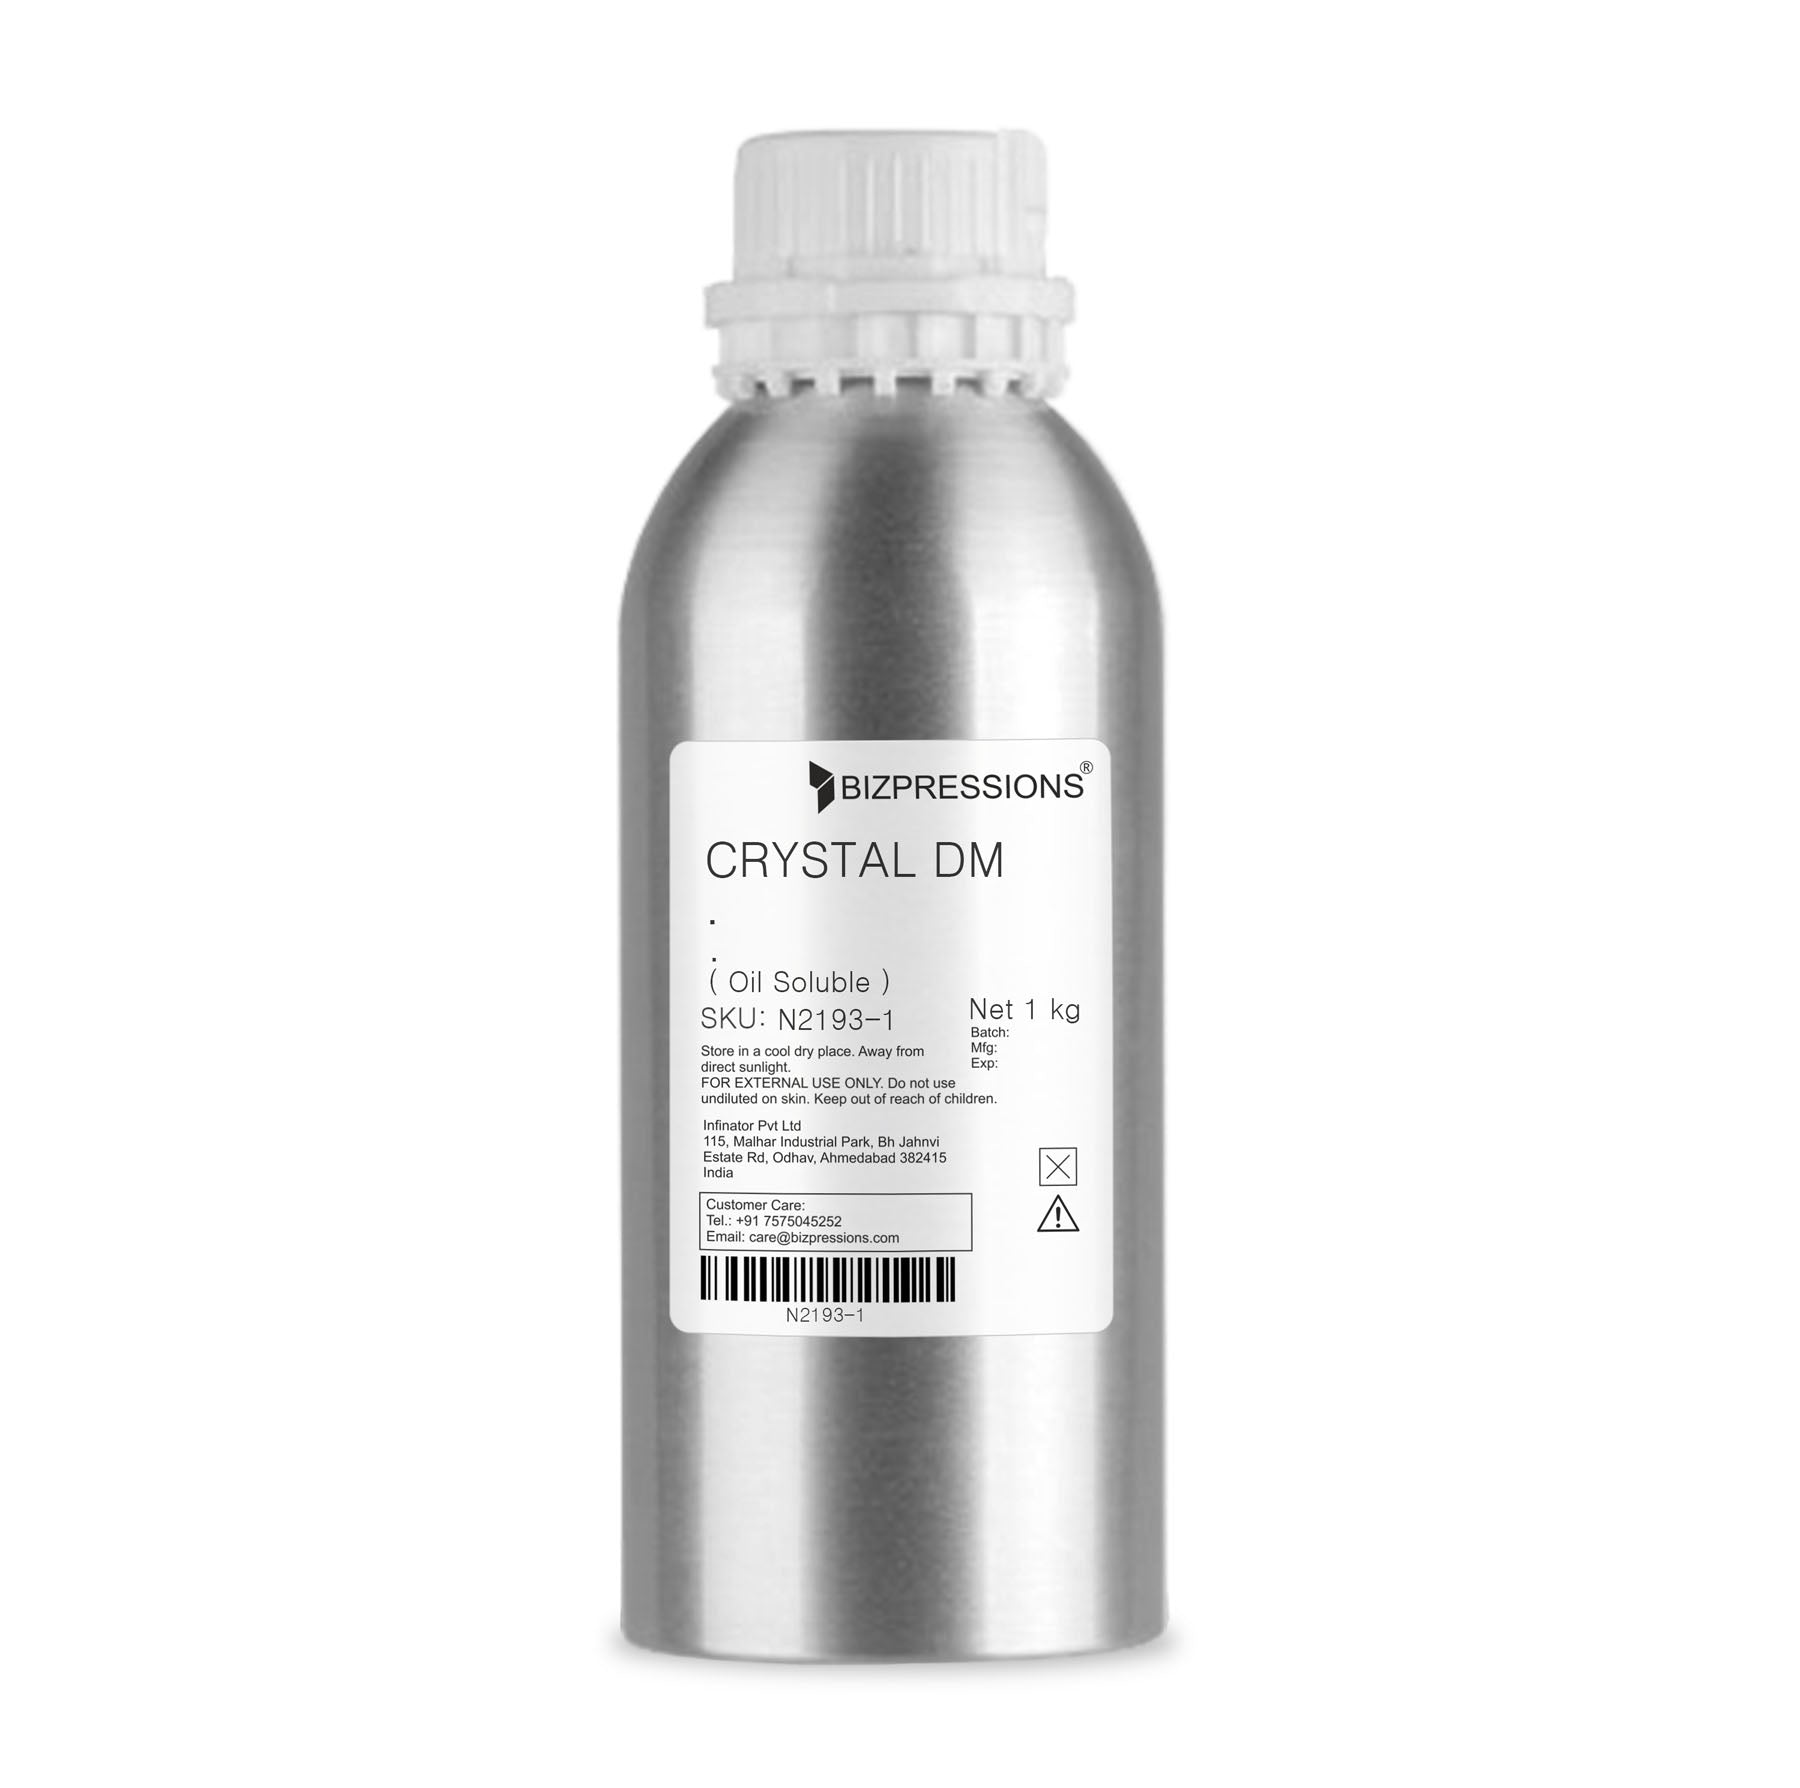 CRYSTAL DM - Fragrance ( Oil Soluble ) - 1 kg